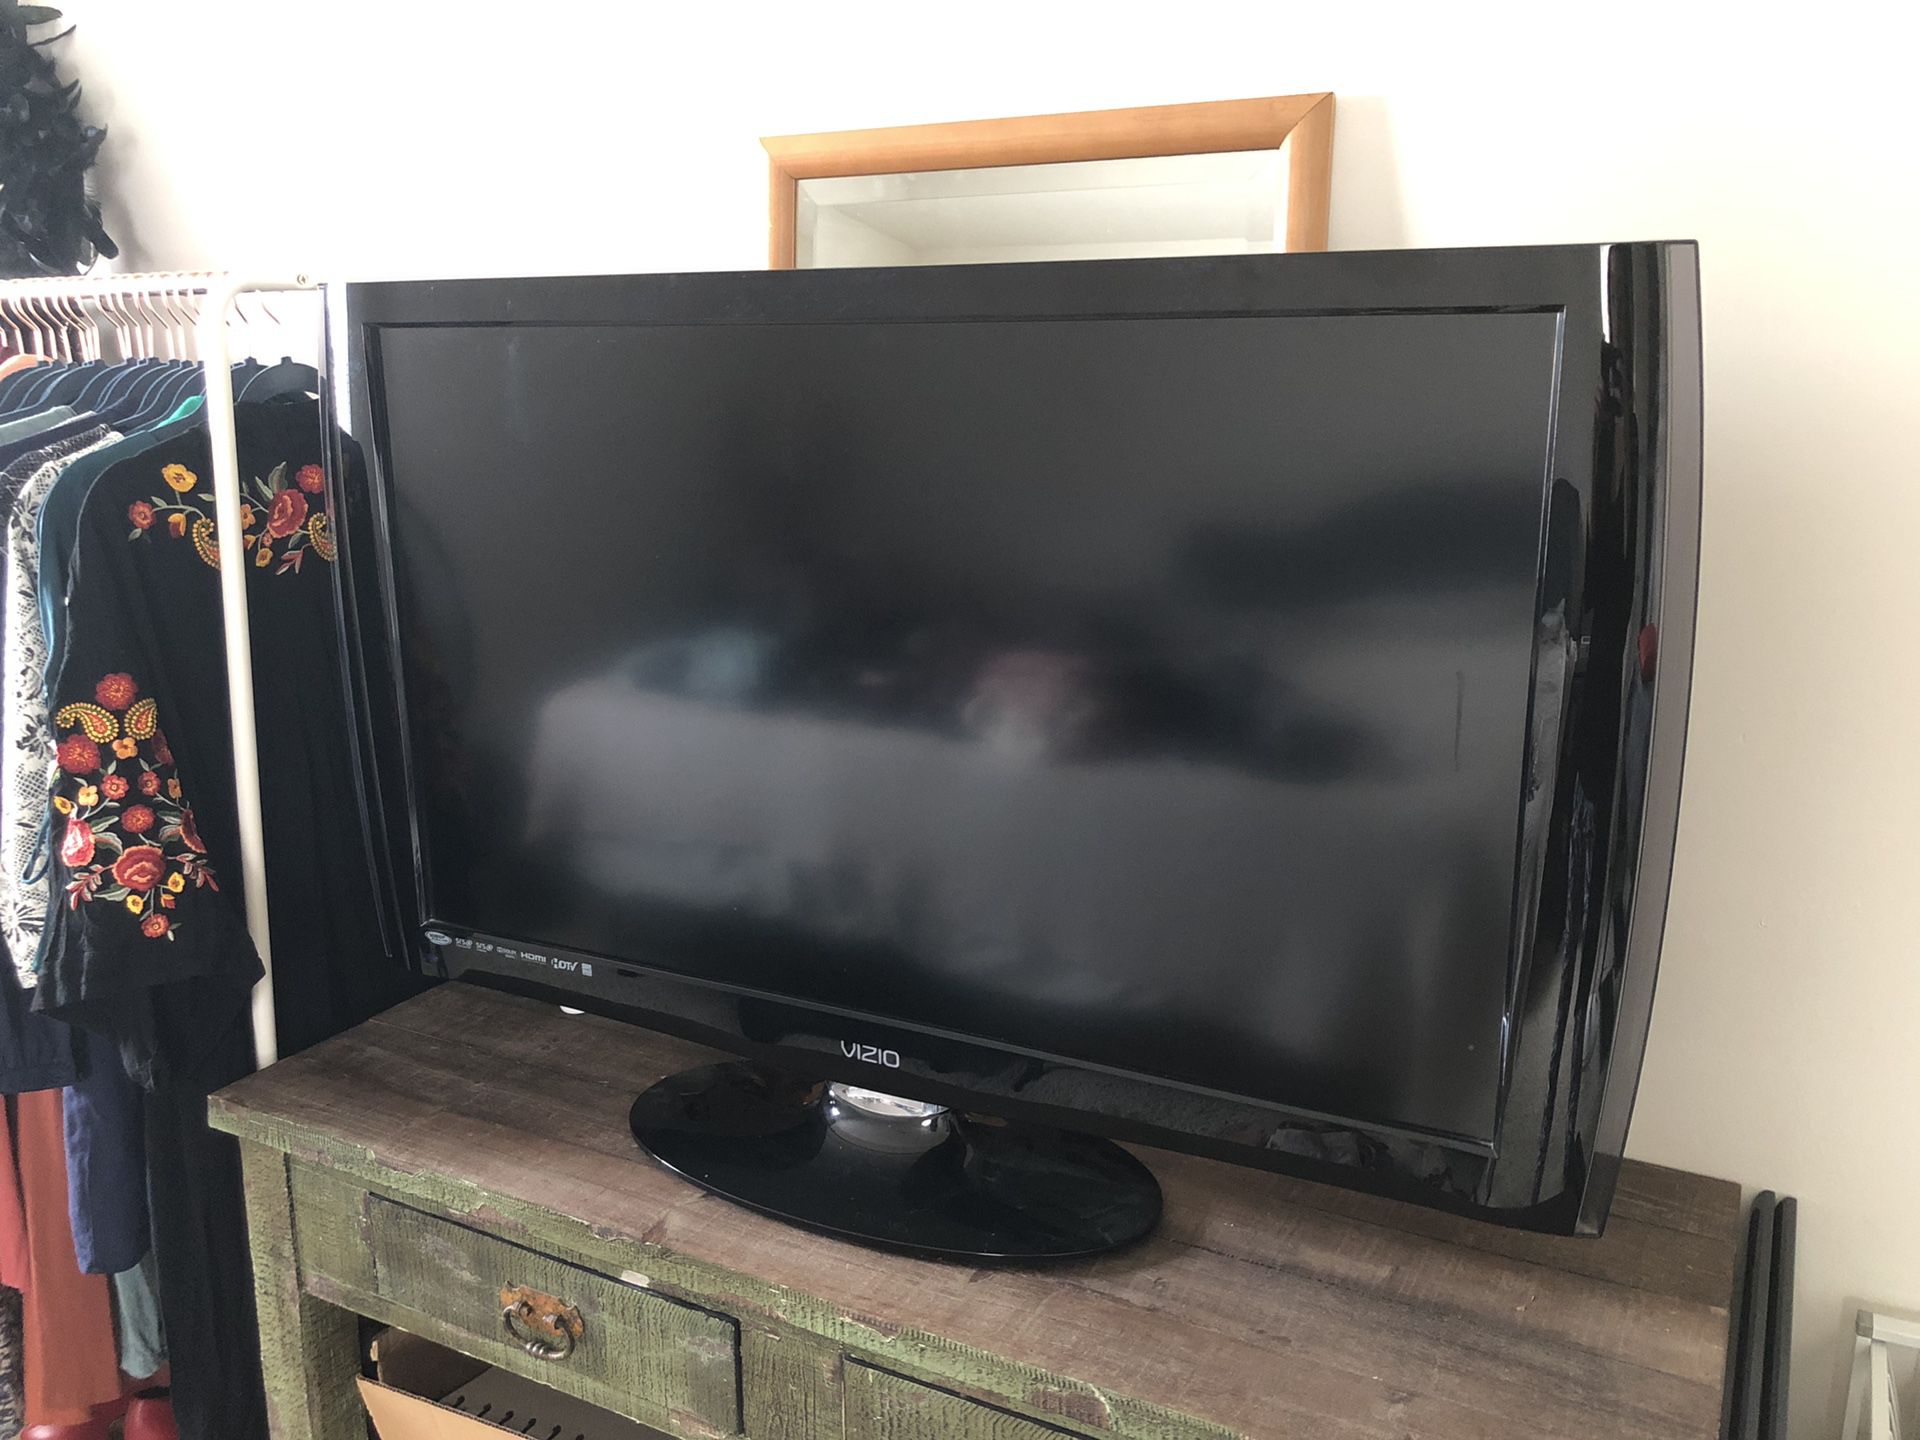 Vizio 42” flat screen tv